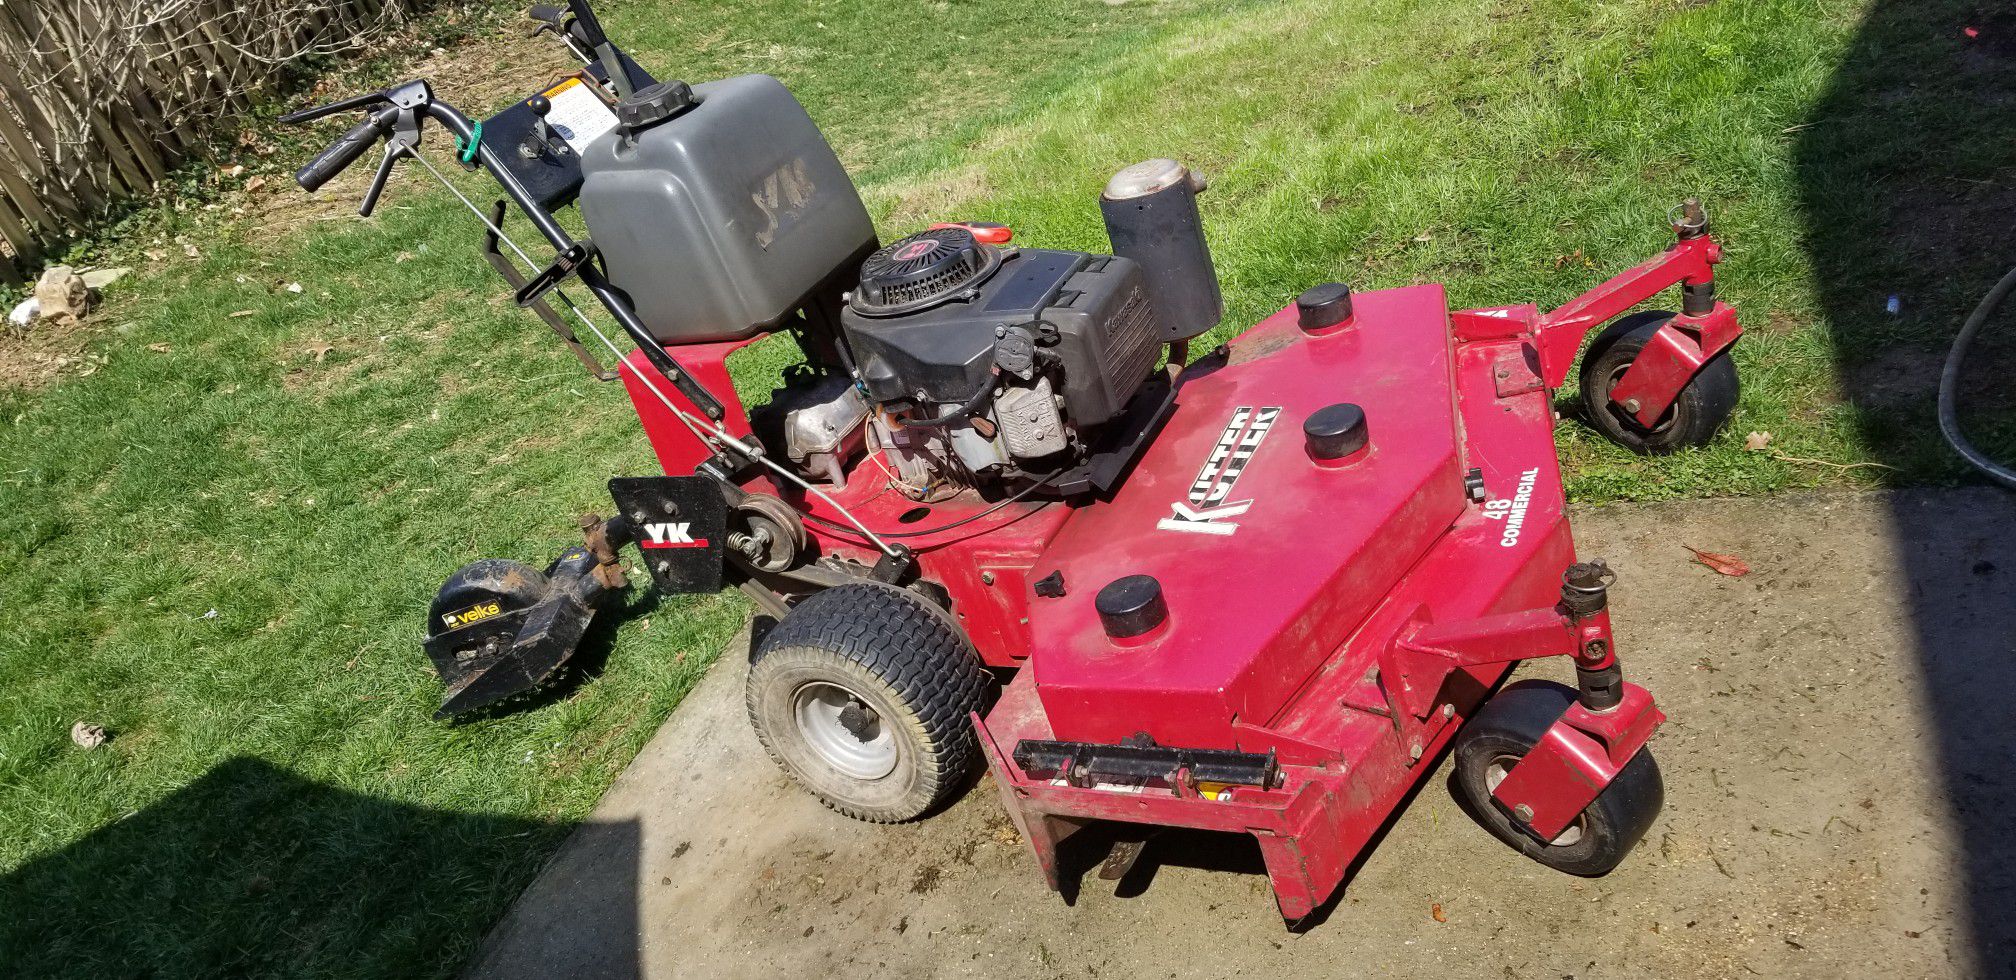 48" lawn mower